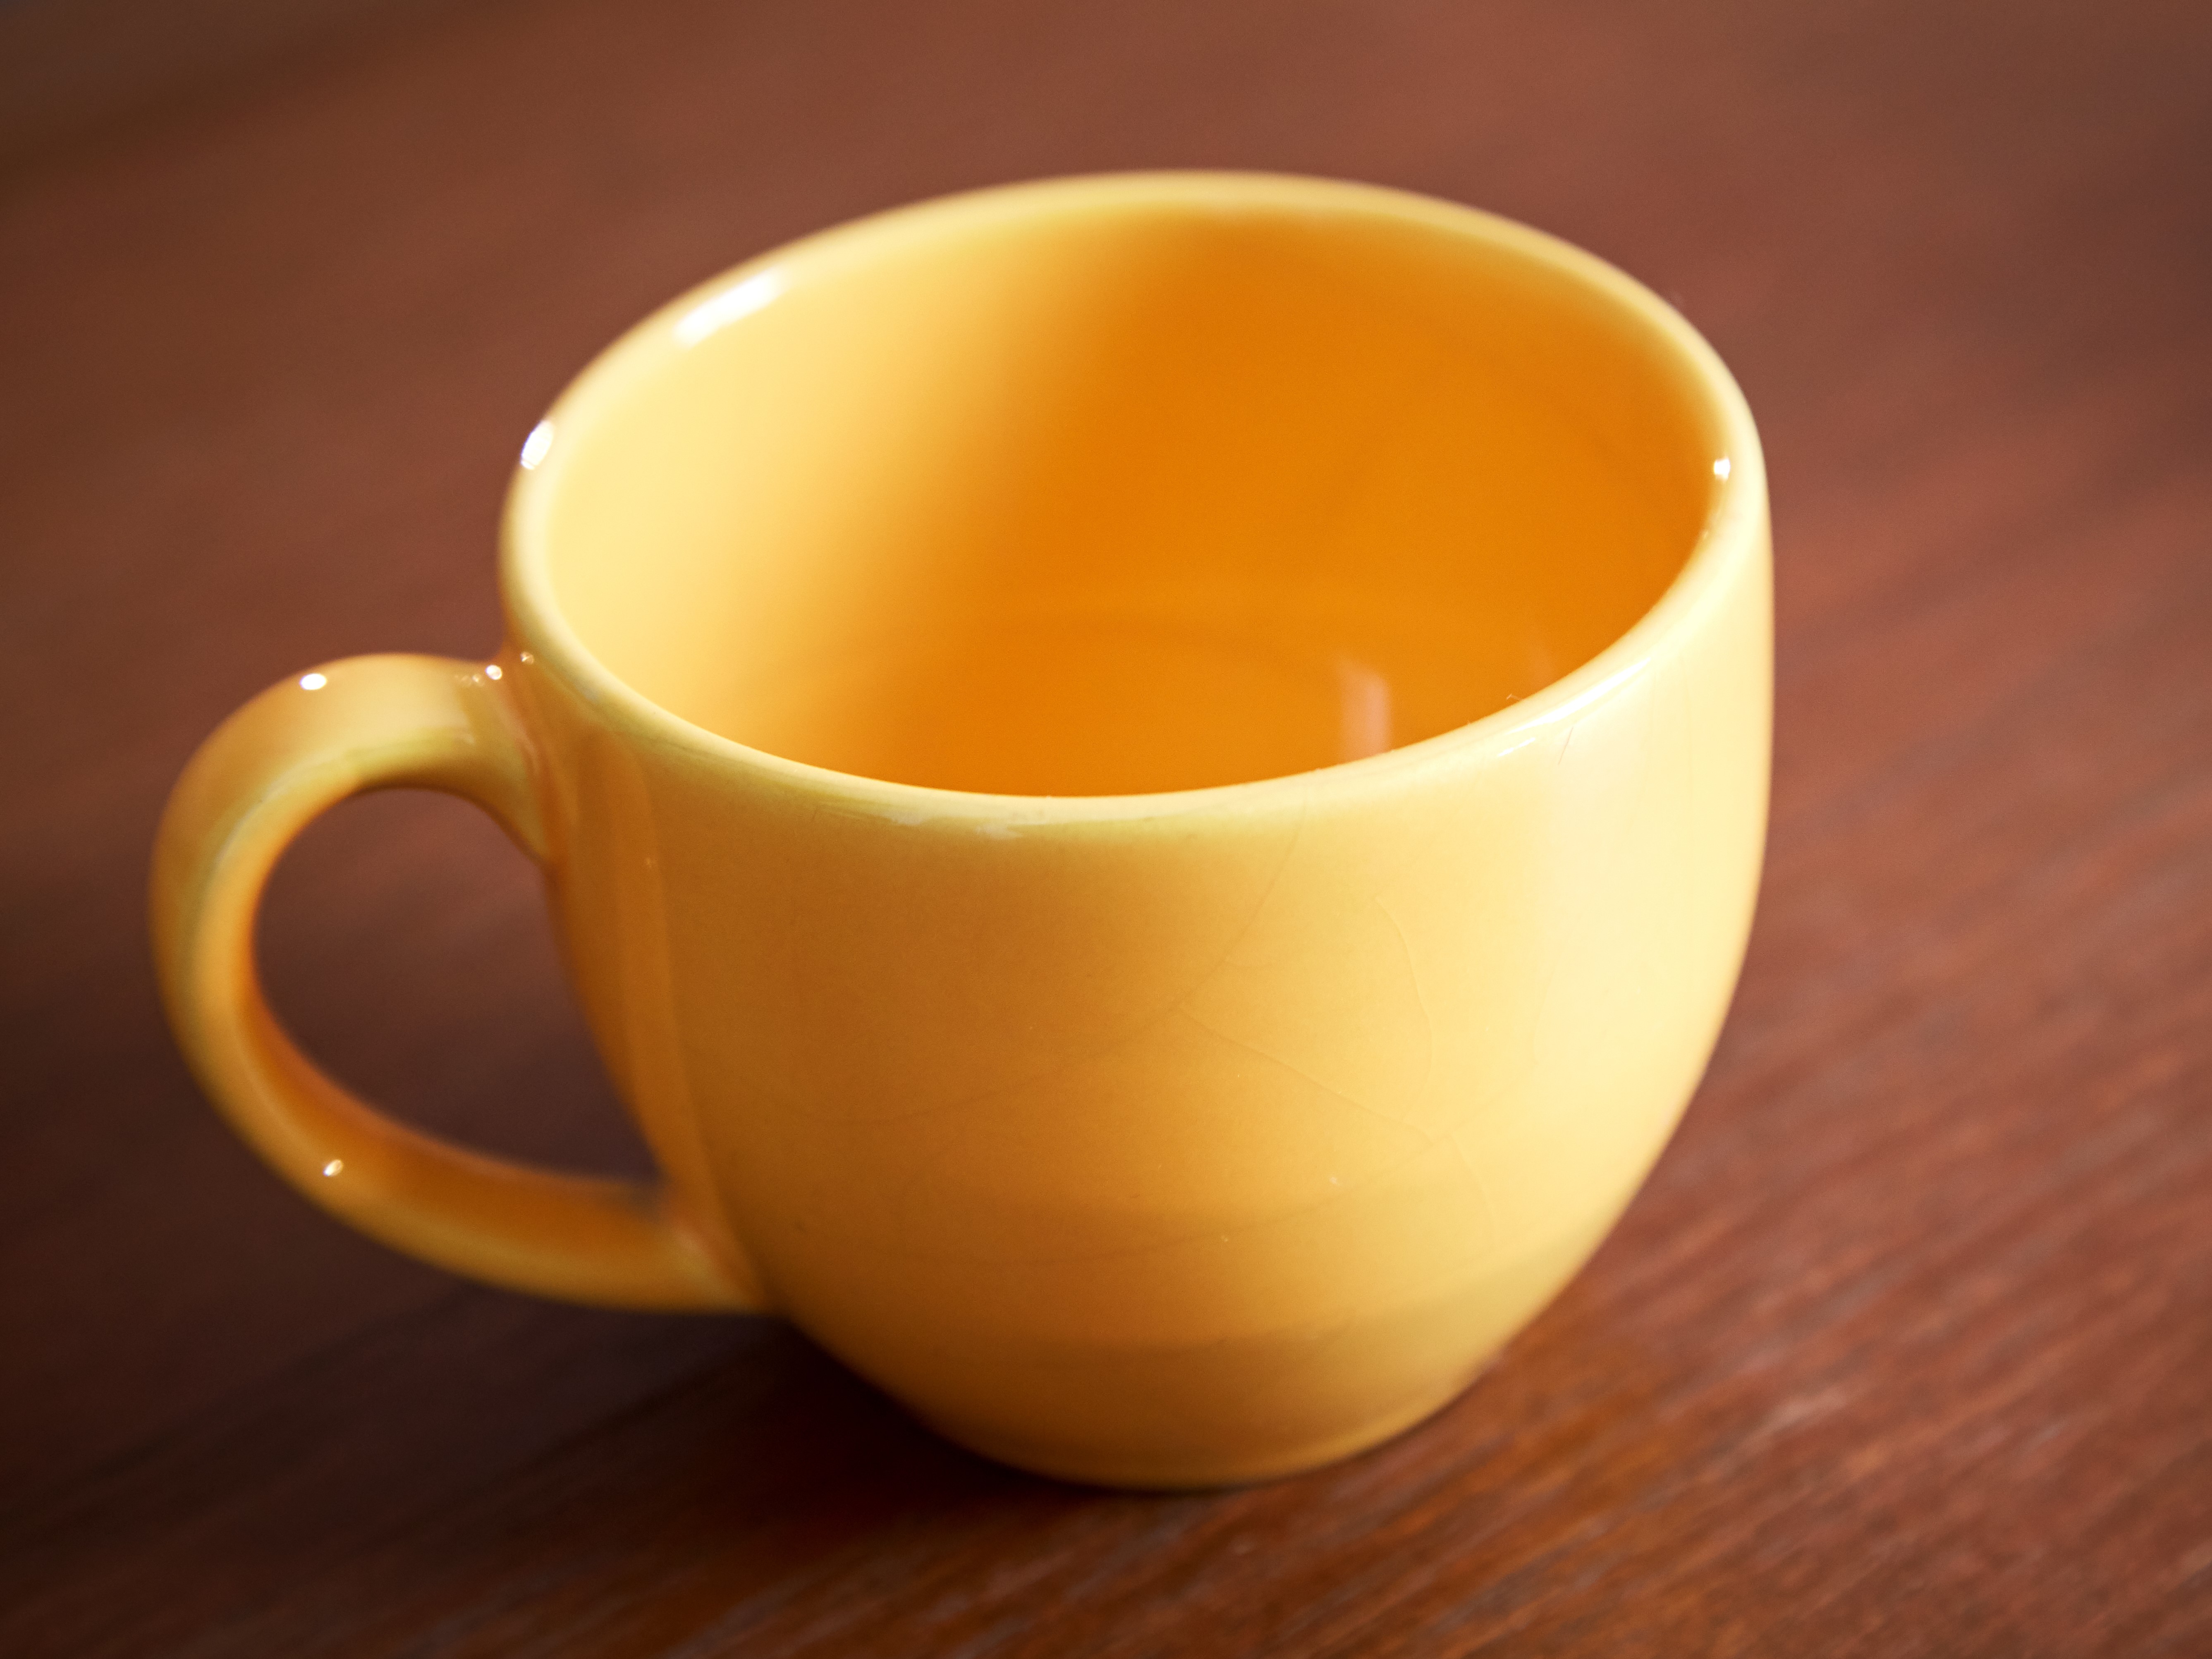 empty, yellow ceramic mug on wooden table